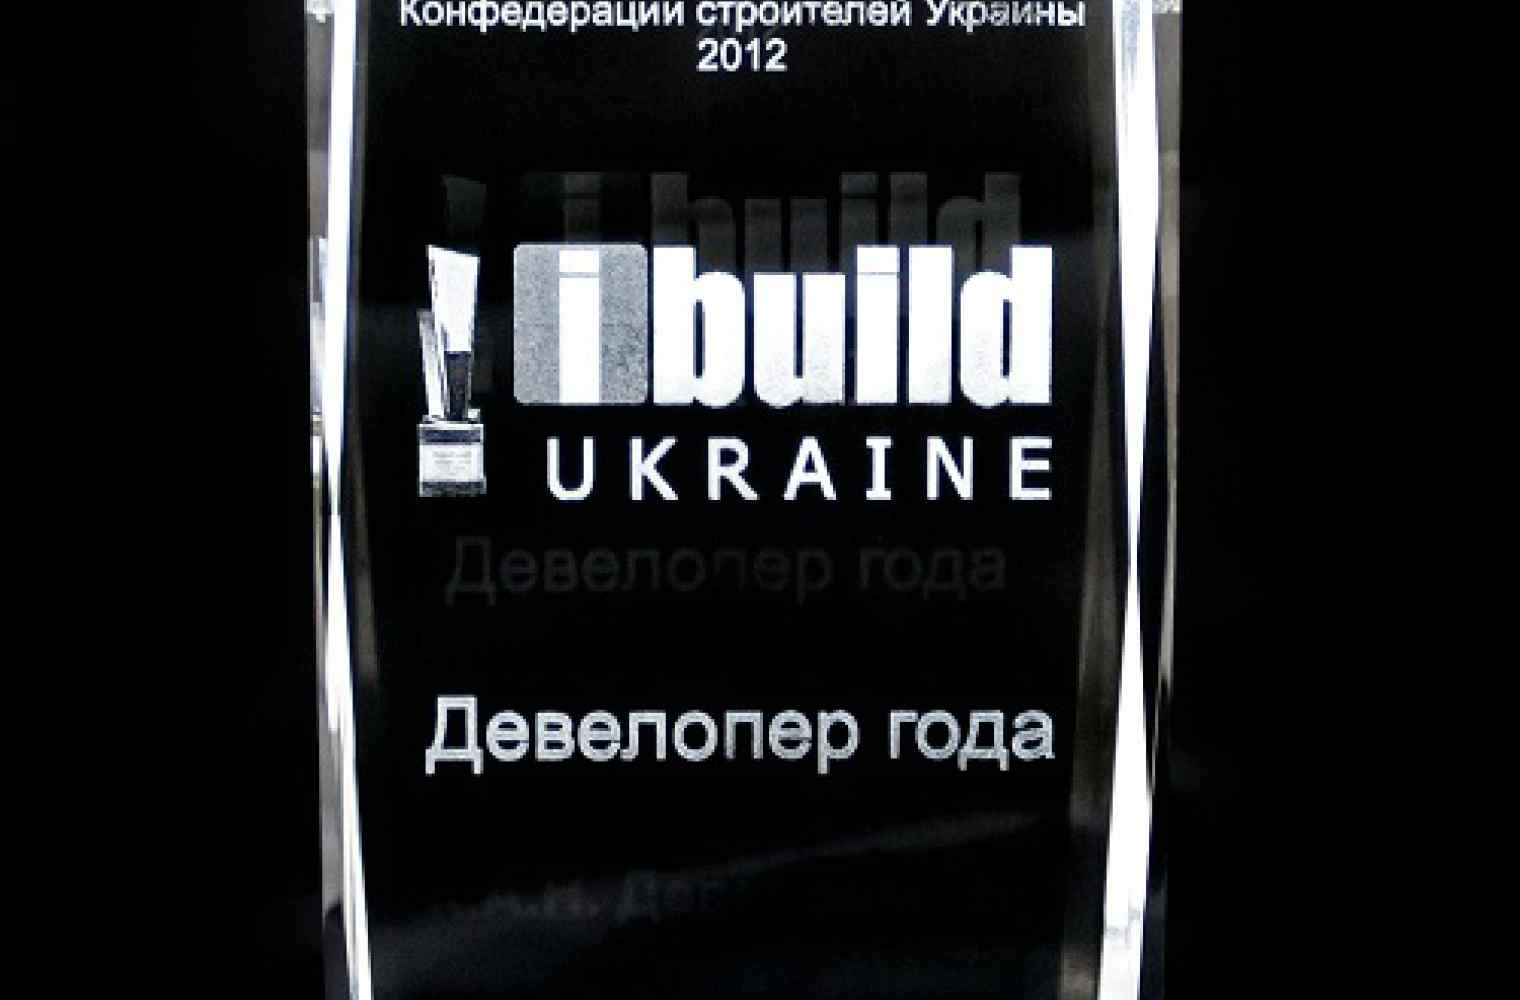 KAN Development is the winner in “Developer of the Year” nomination – the second All-Ukrainian IBuild Ukraine 2012 award